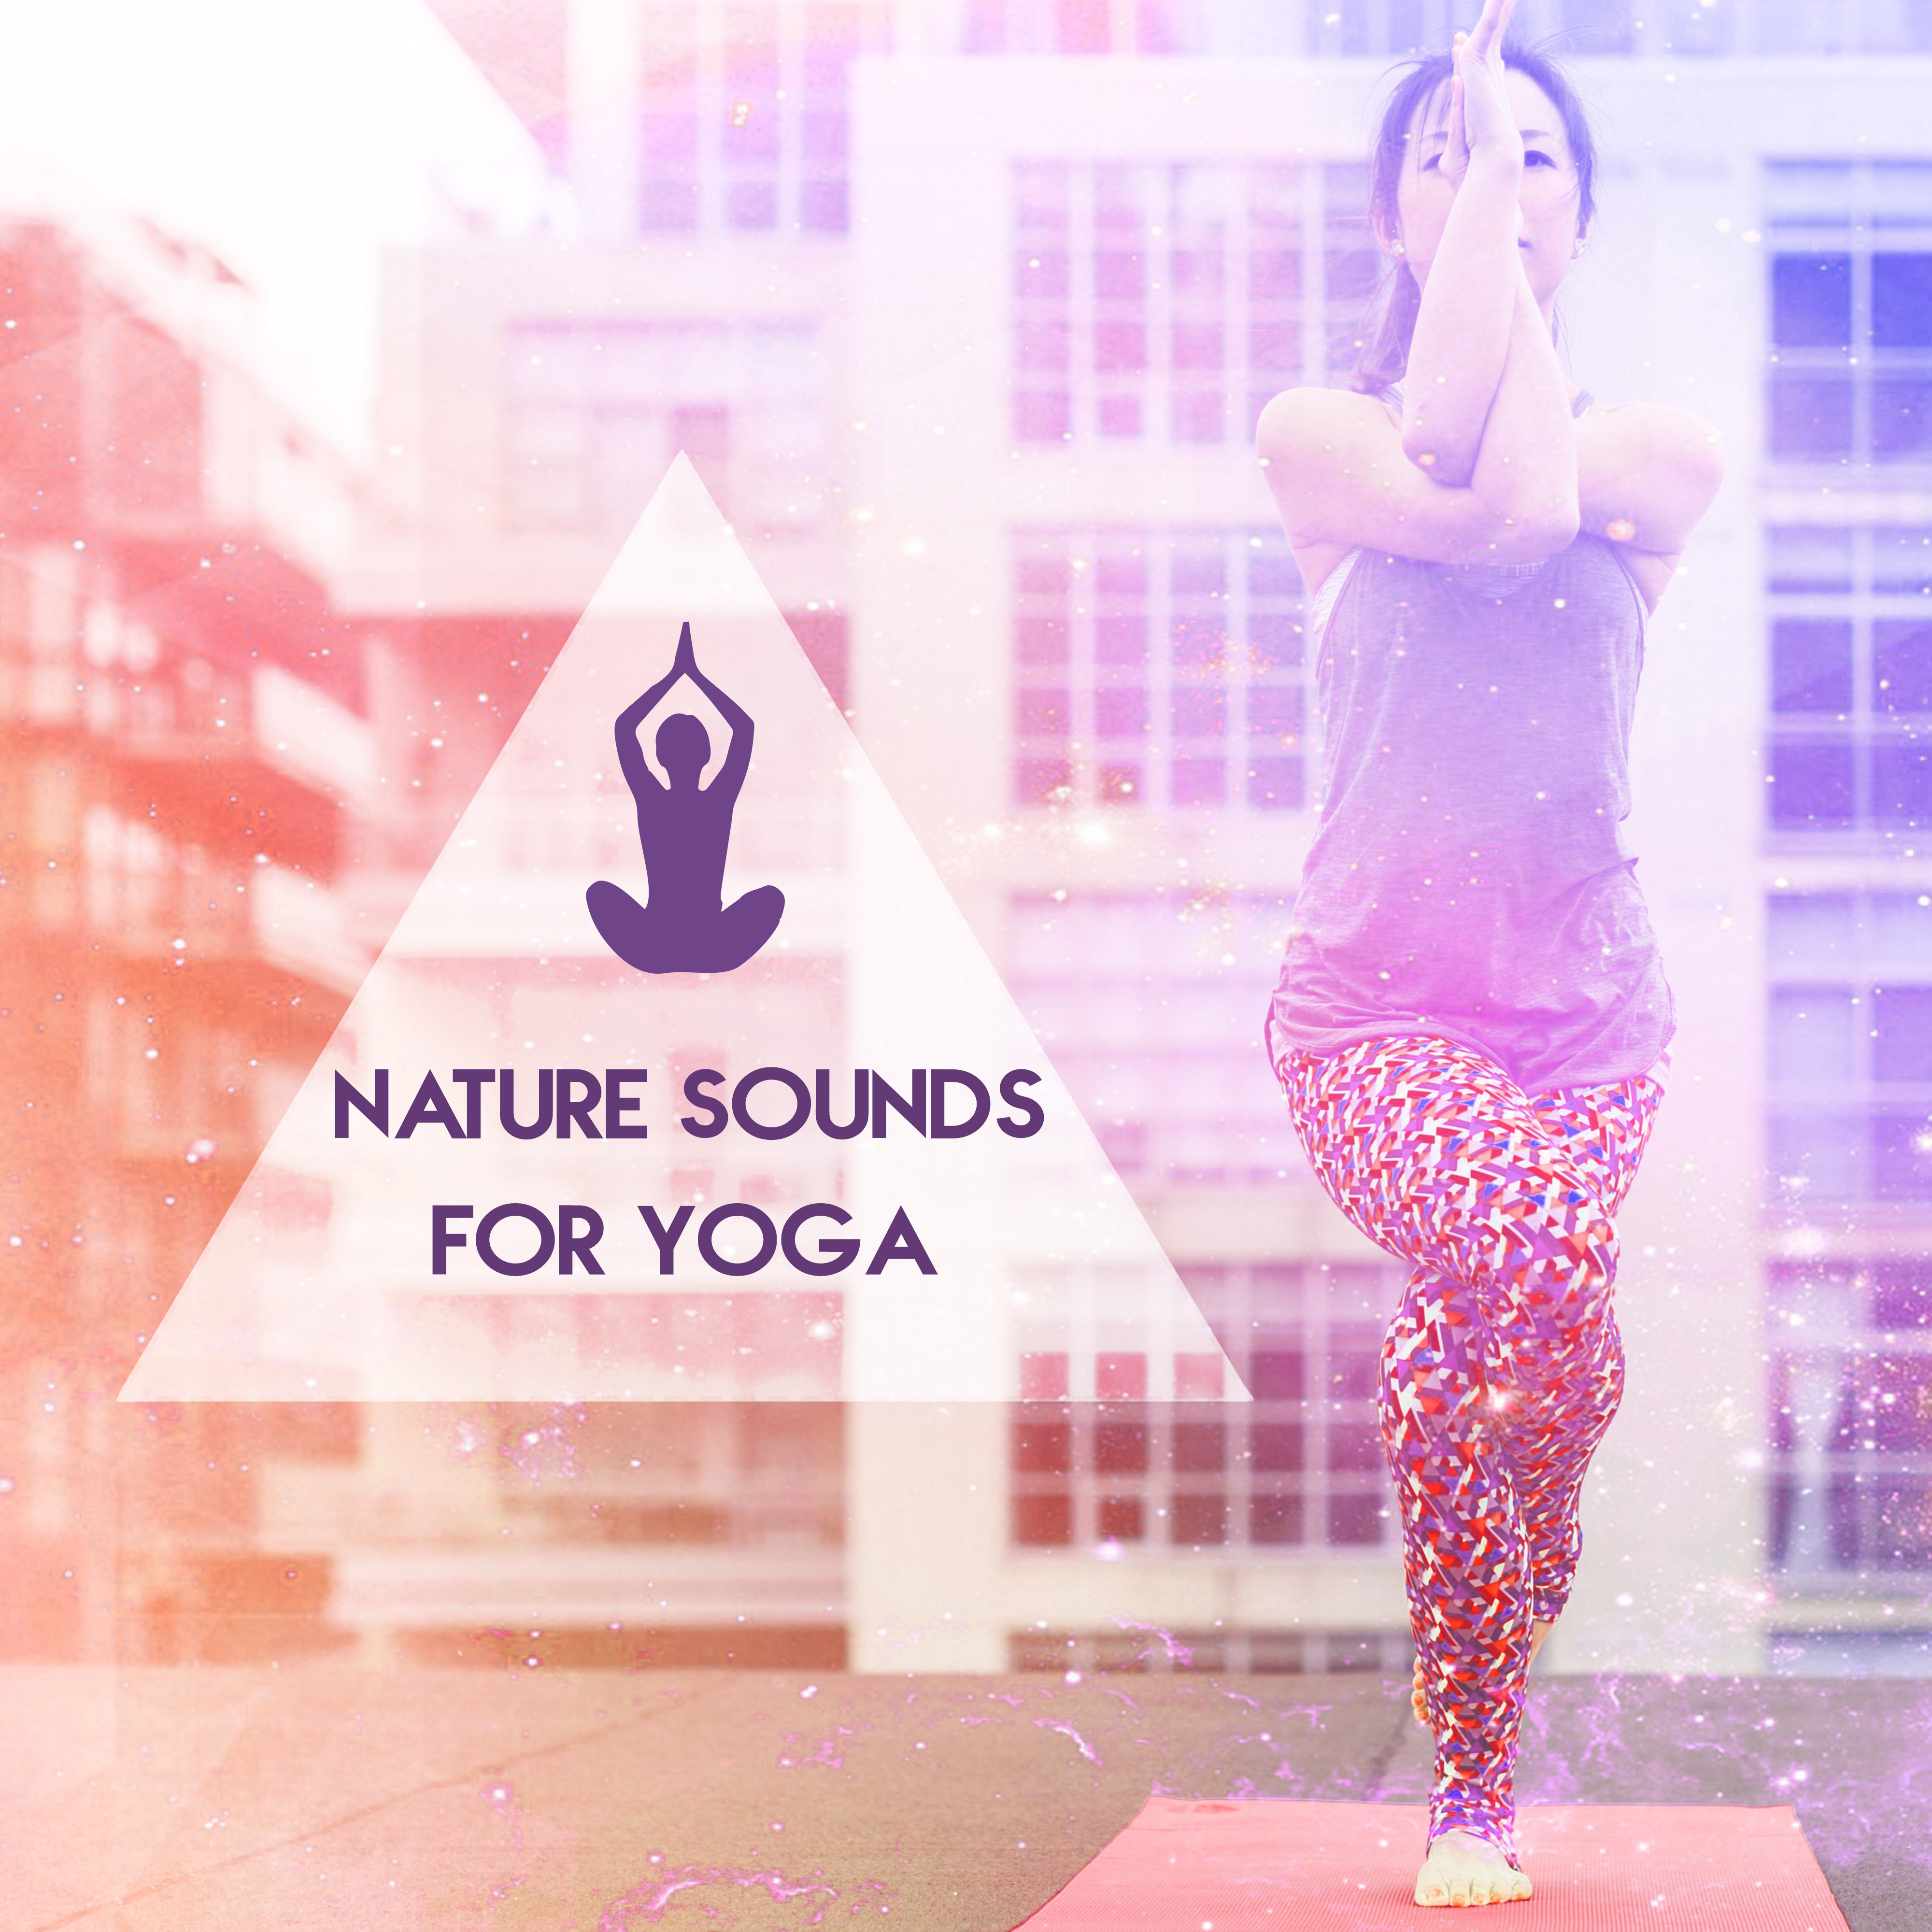 Nature Sounds for Yoga – Morning Meditation, Pure Relaxation, Hatha Yoga, Chakra Balancing, Spirit of Harmony, Deep Meditation